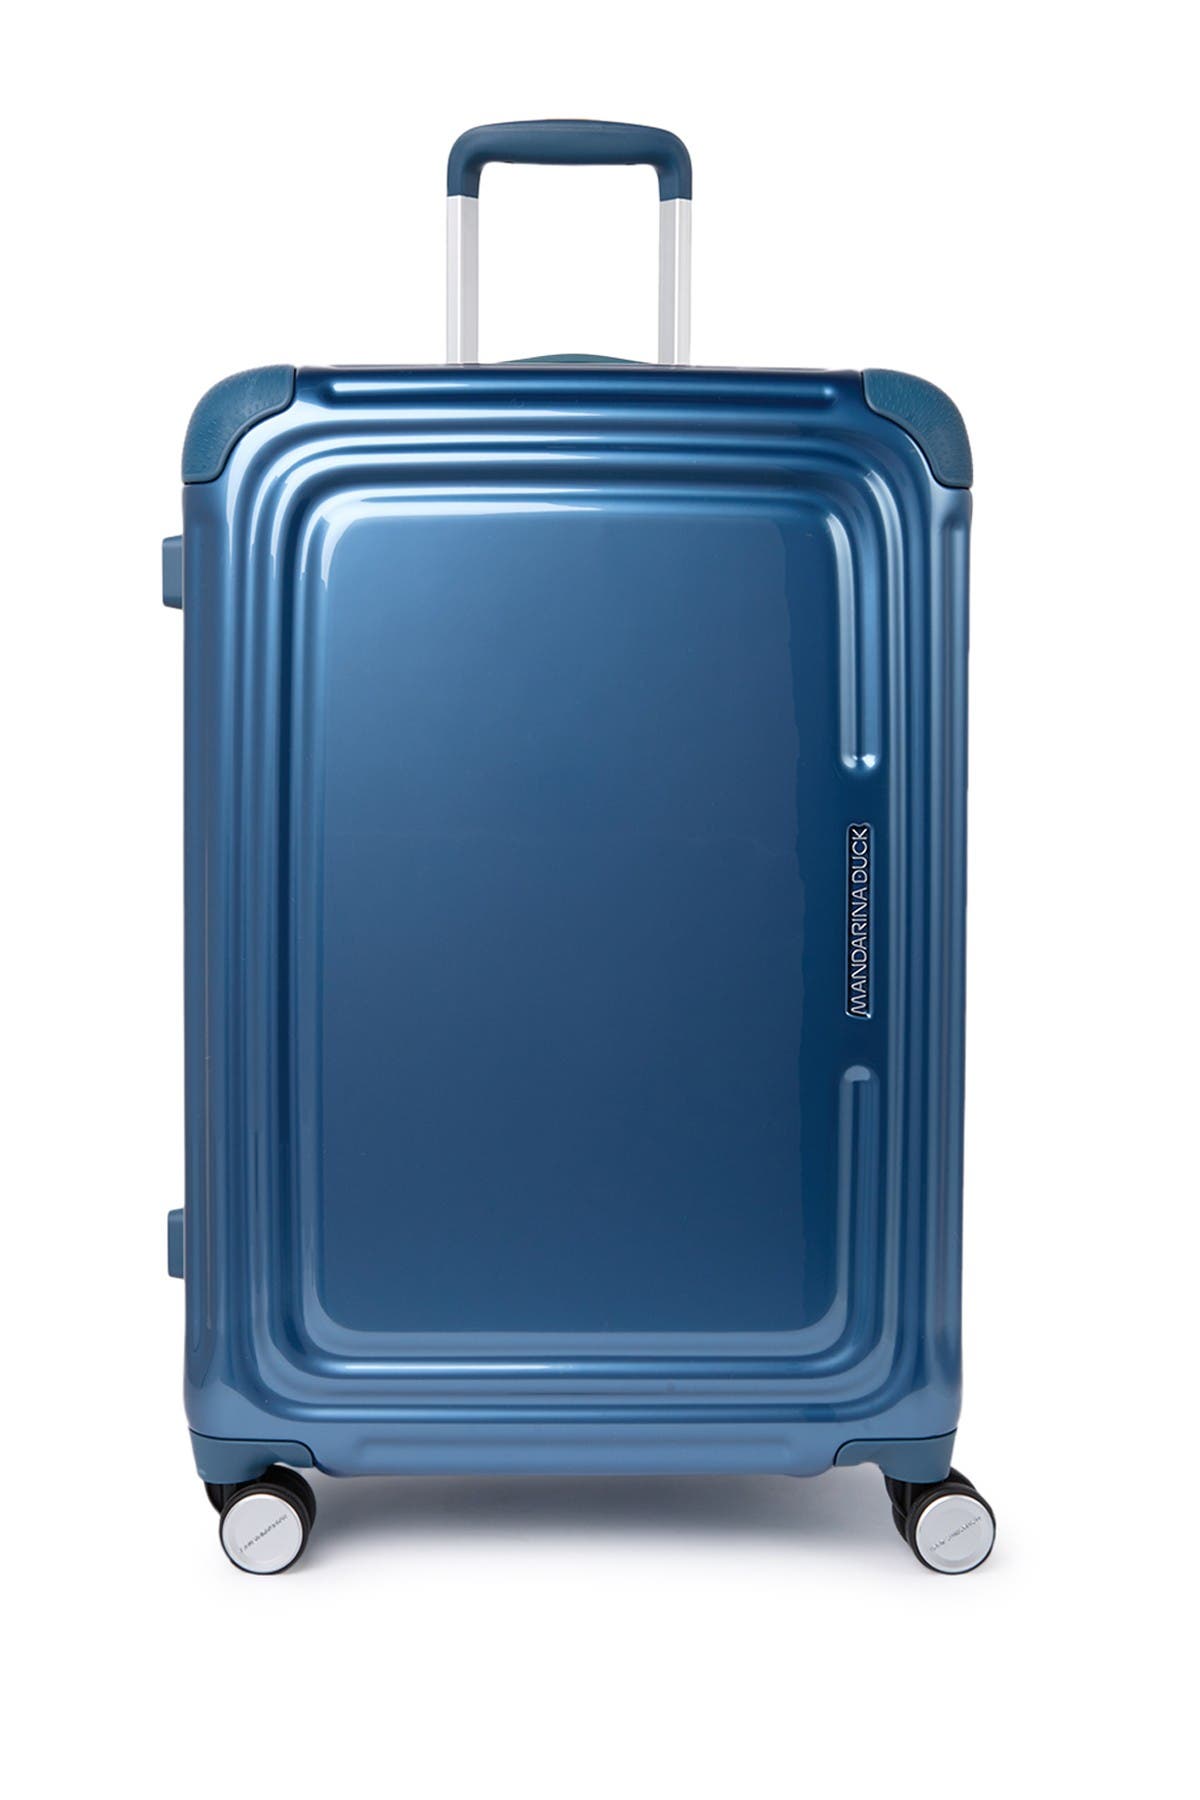 Mandarina Duck C-frame Medium Trolley Hardshell Luggage In Blue Mirage